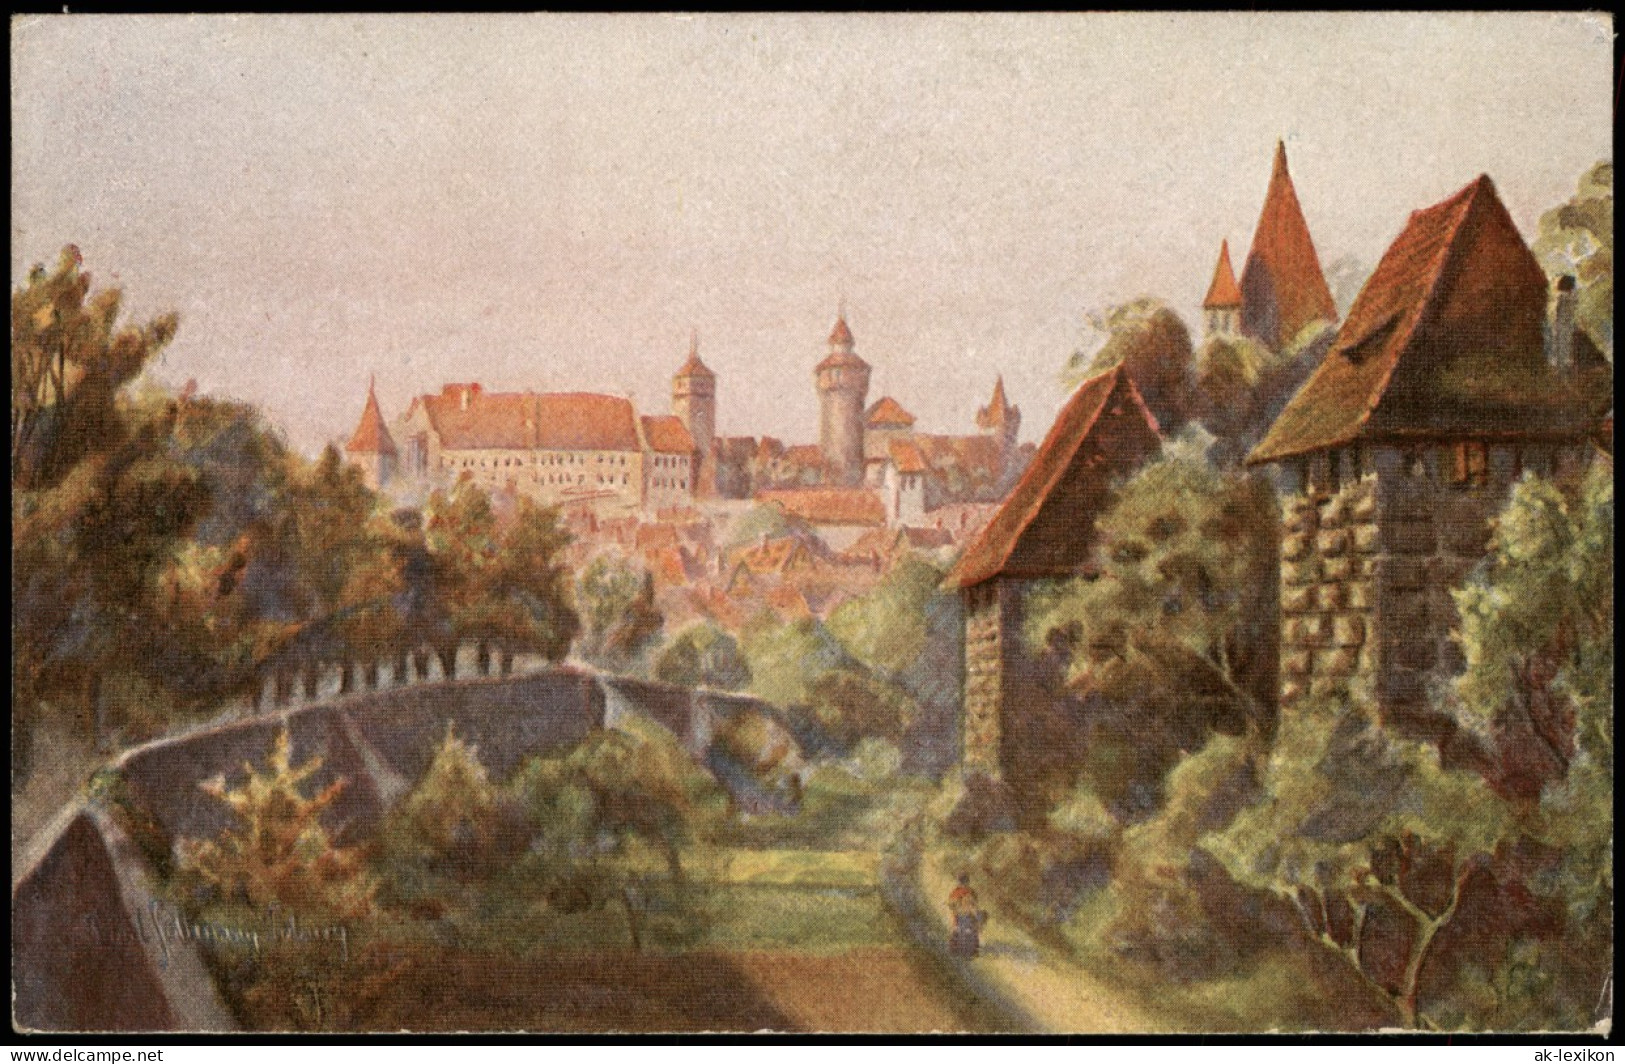 Ansichtskarte Nürnberg Spittlertor Partie, Künstlerkarte 1910 - Nuernberg